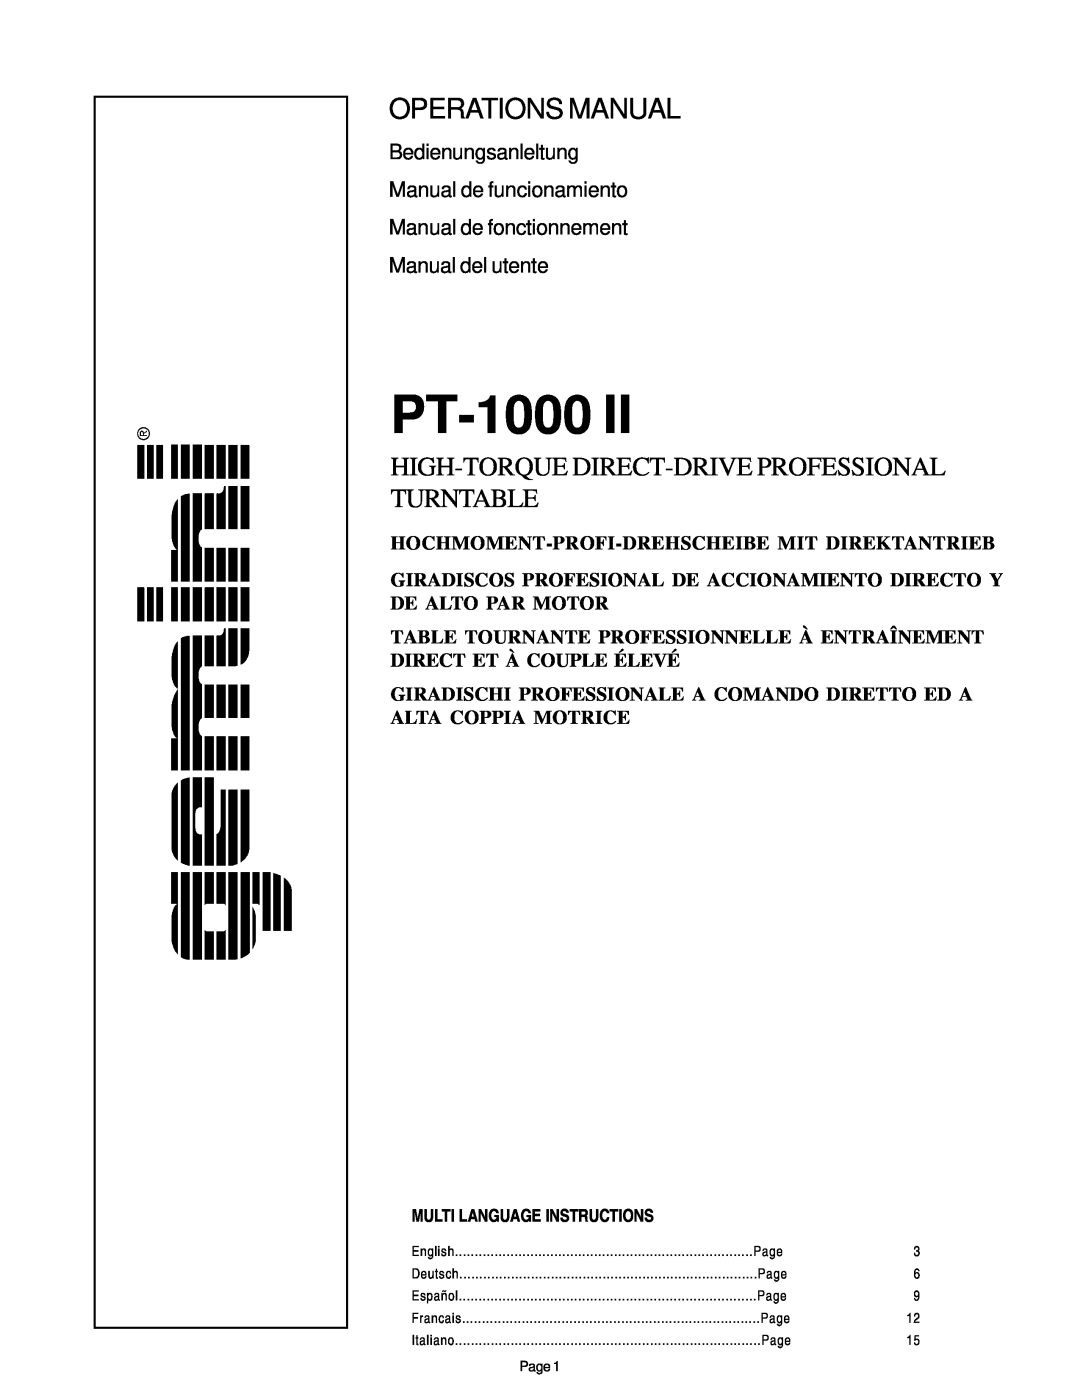 Gemini PT-1000 II manual Bedienungsanleltung Manual de funcionamiento, Manual de fonctionnement Manual del utente 